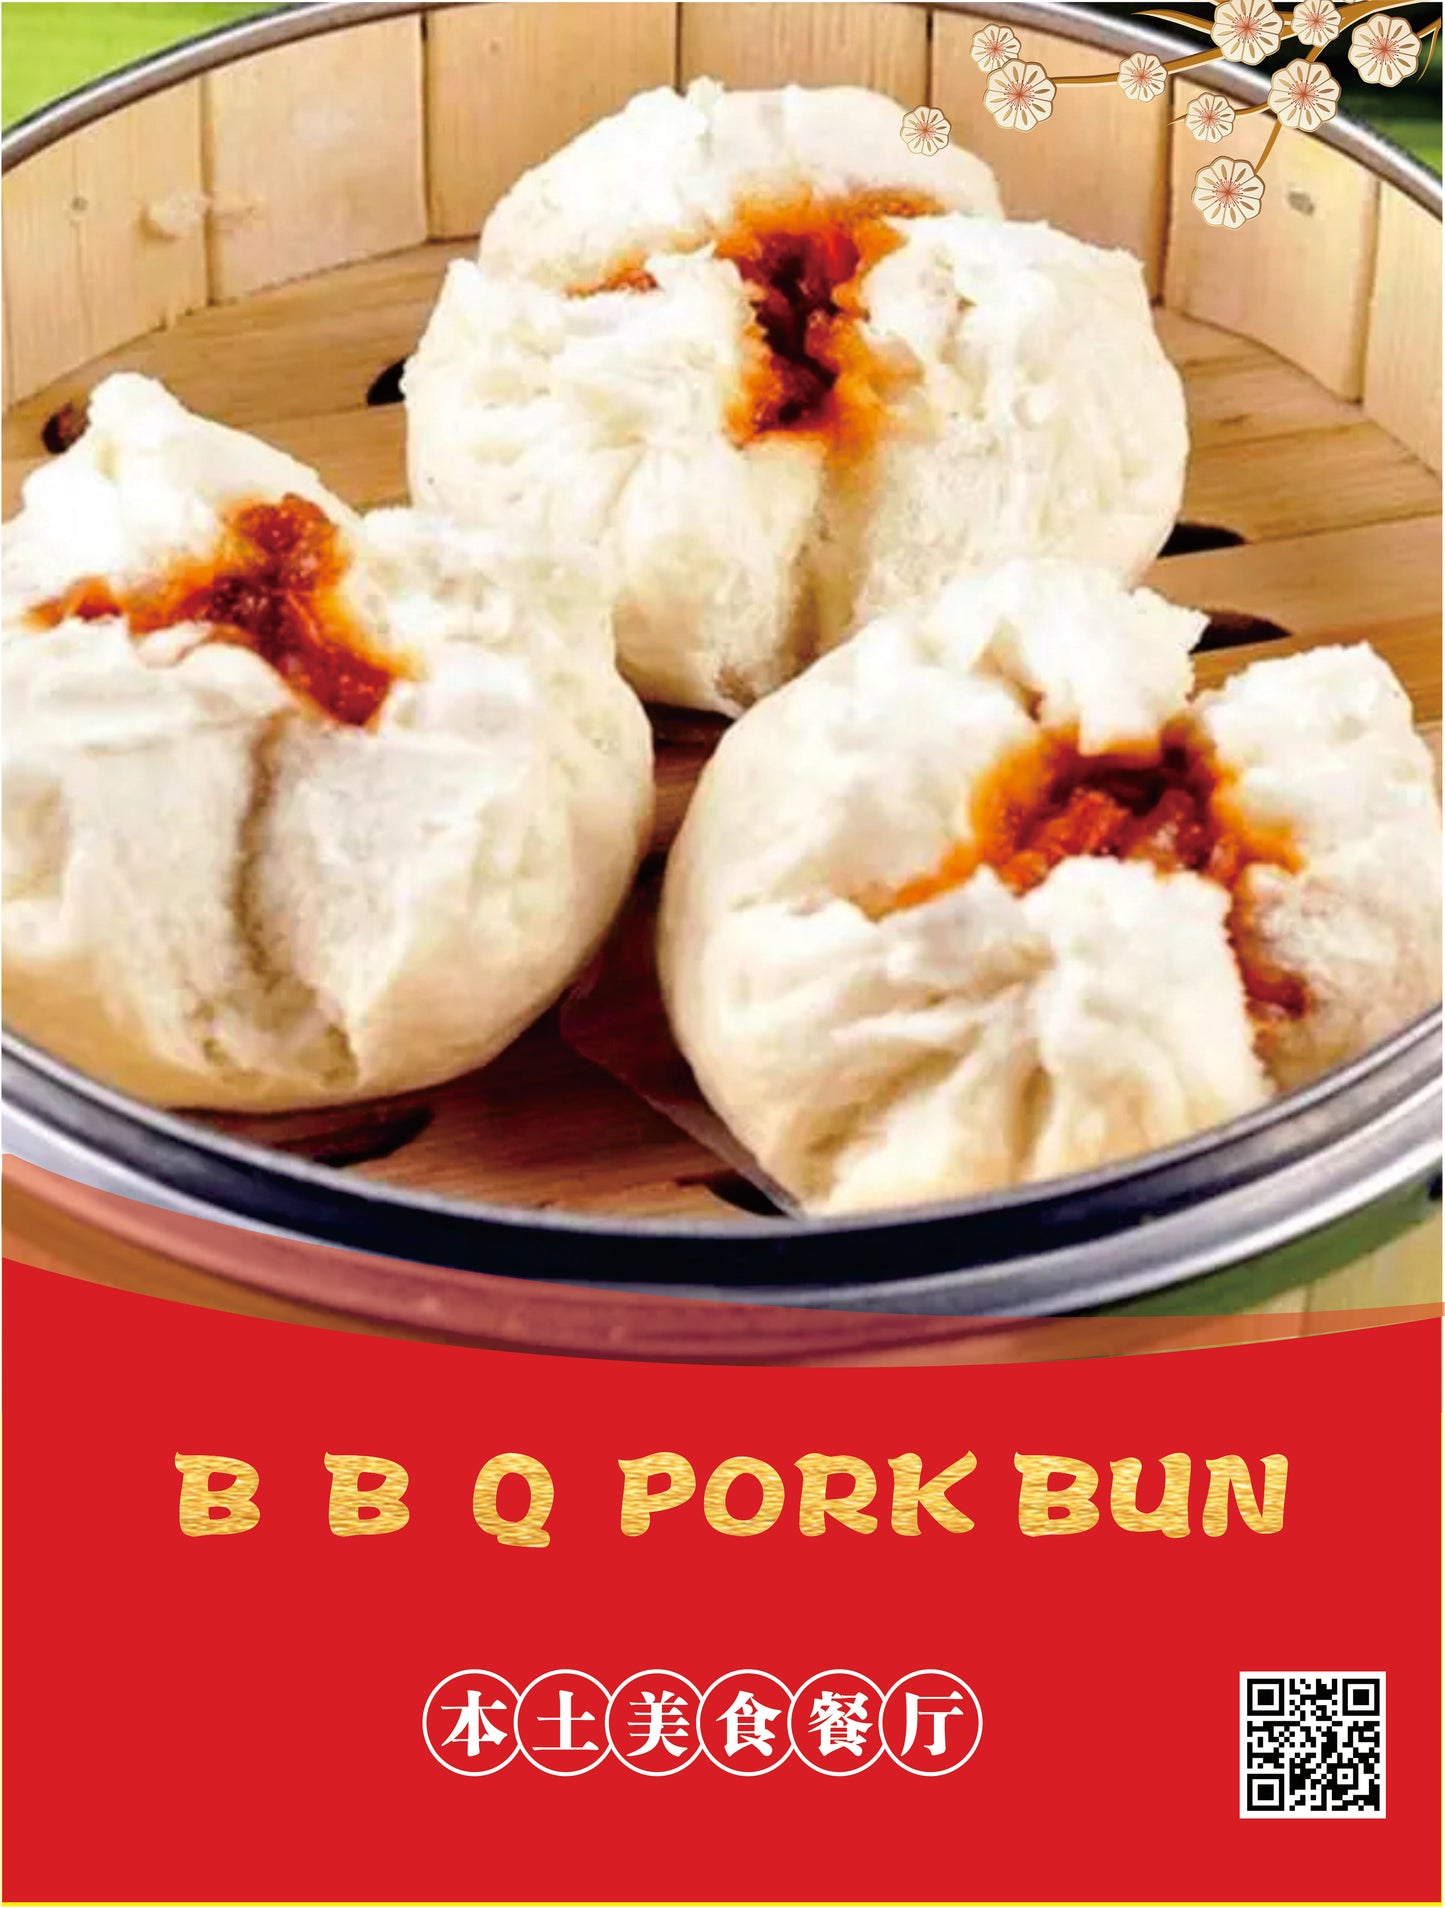 B.B.Q Pork Bun